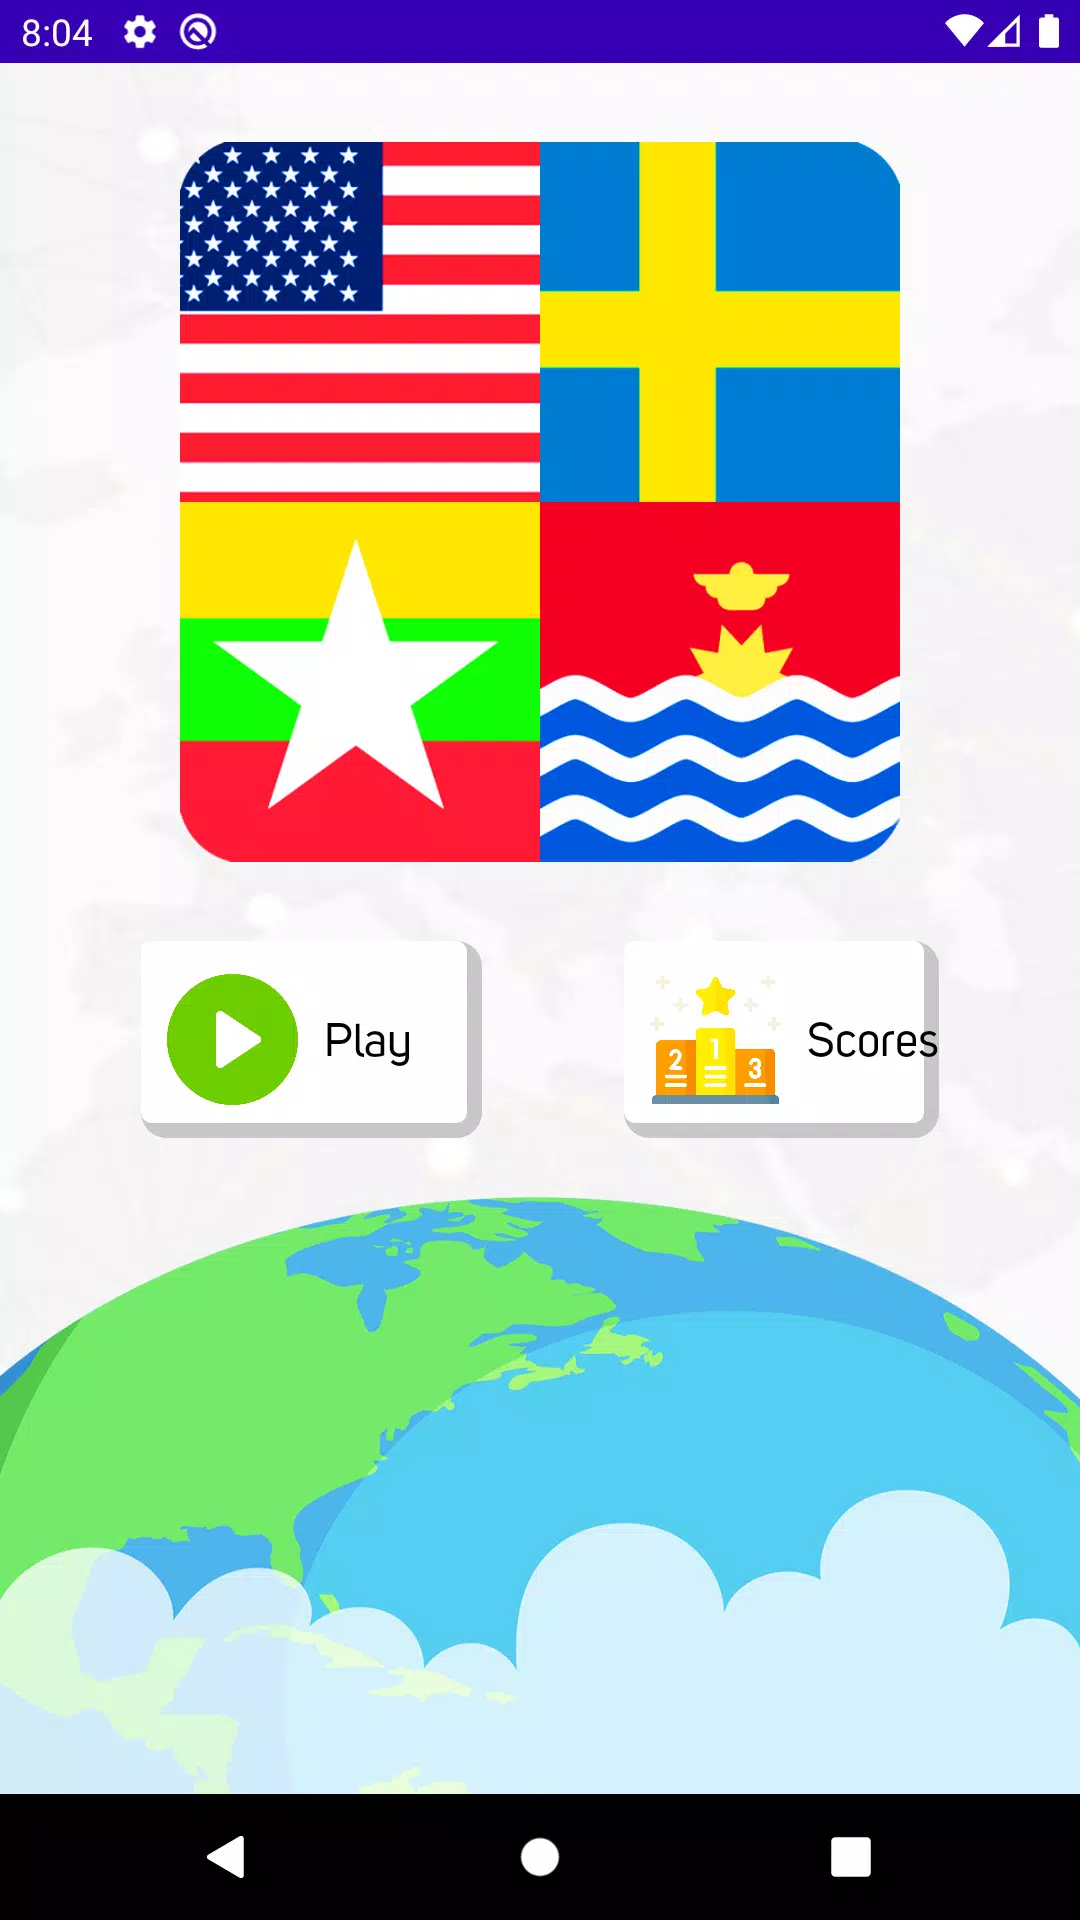 World Flags Quiz ⭐